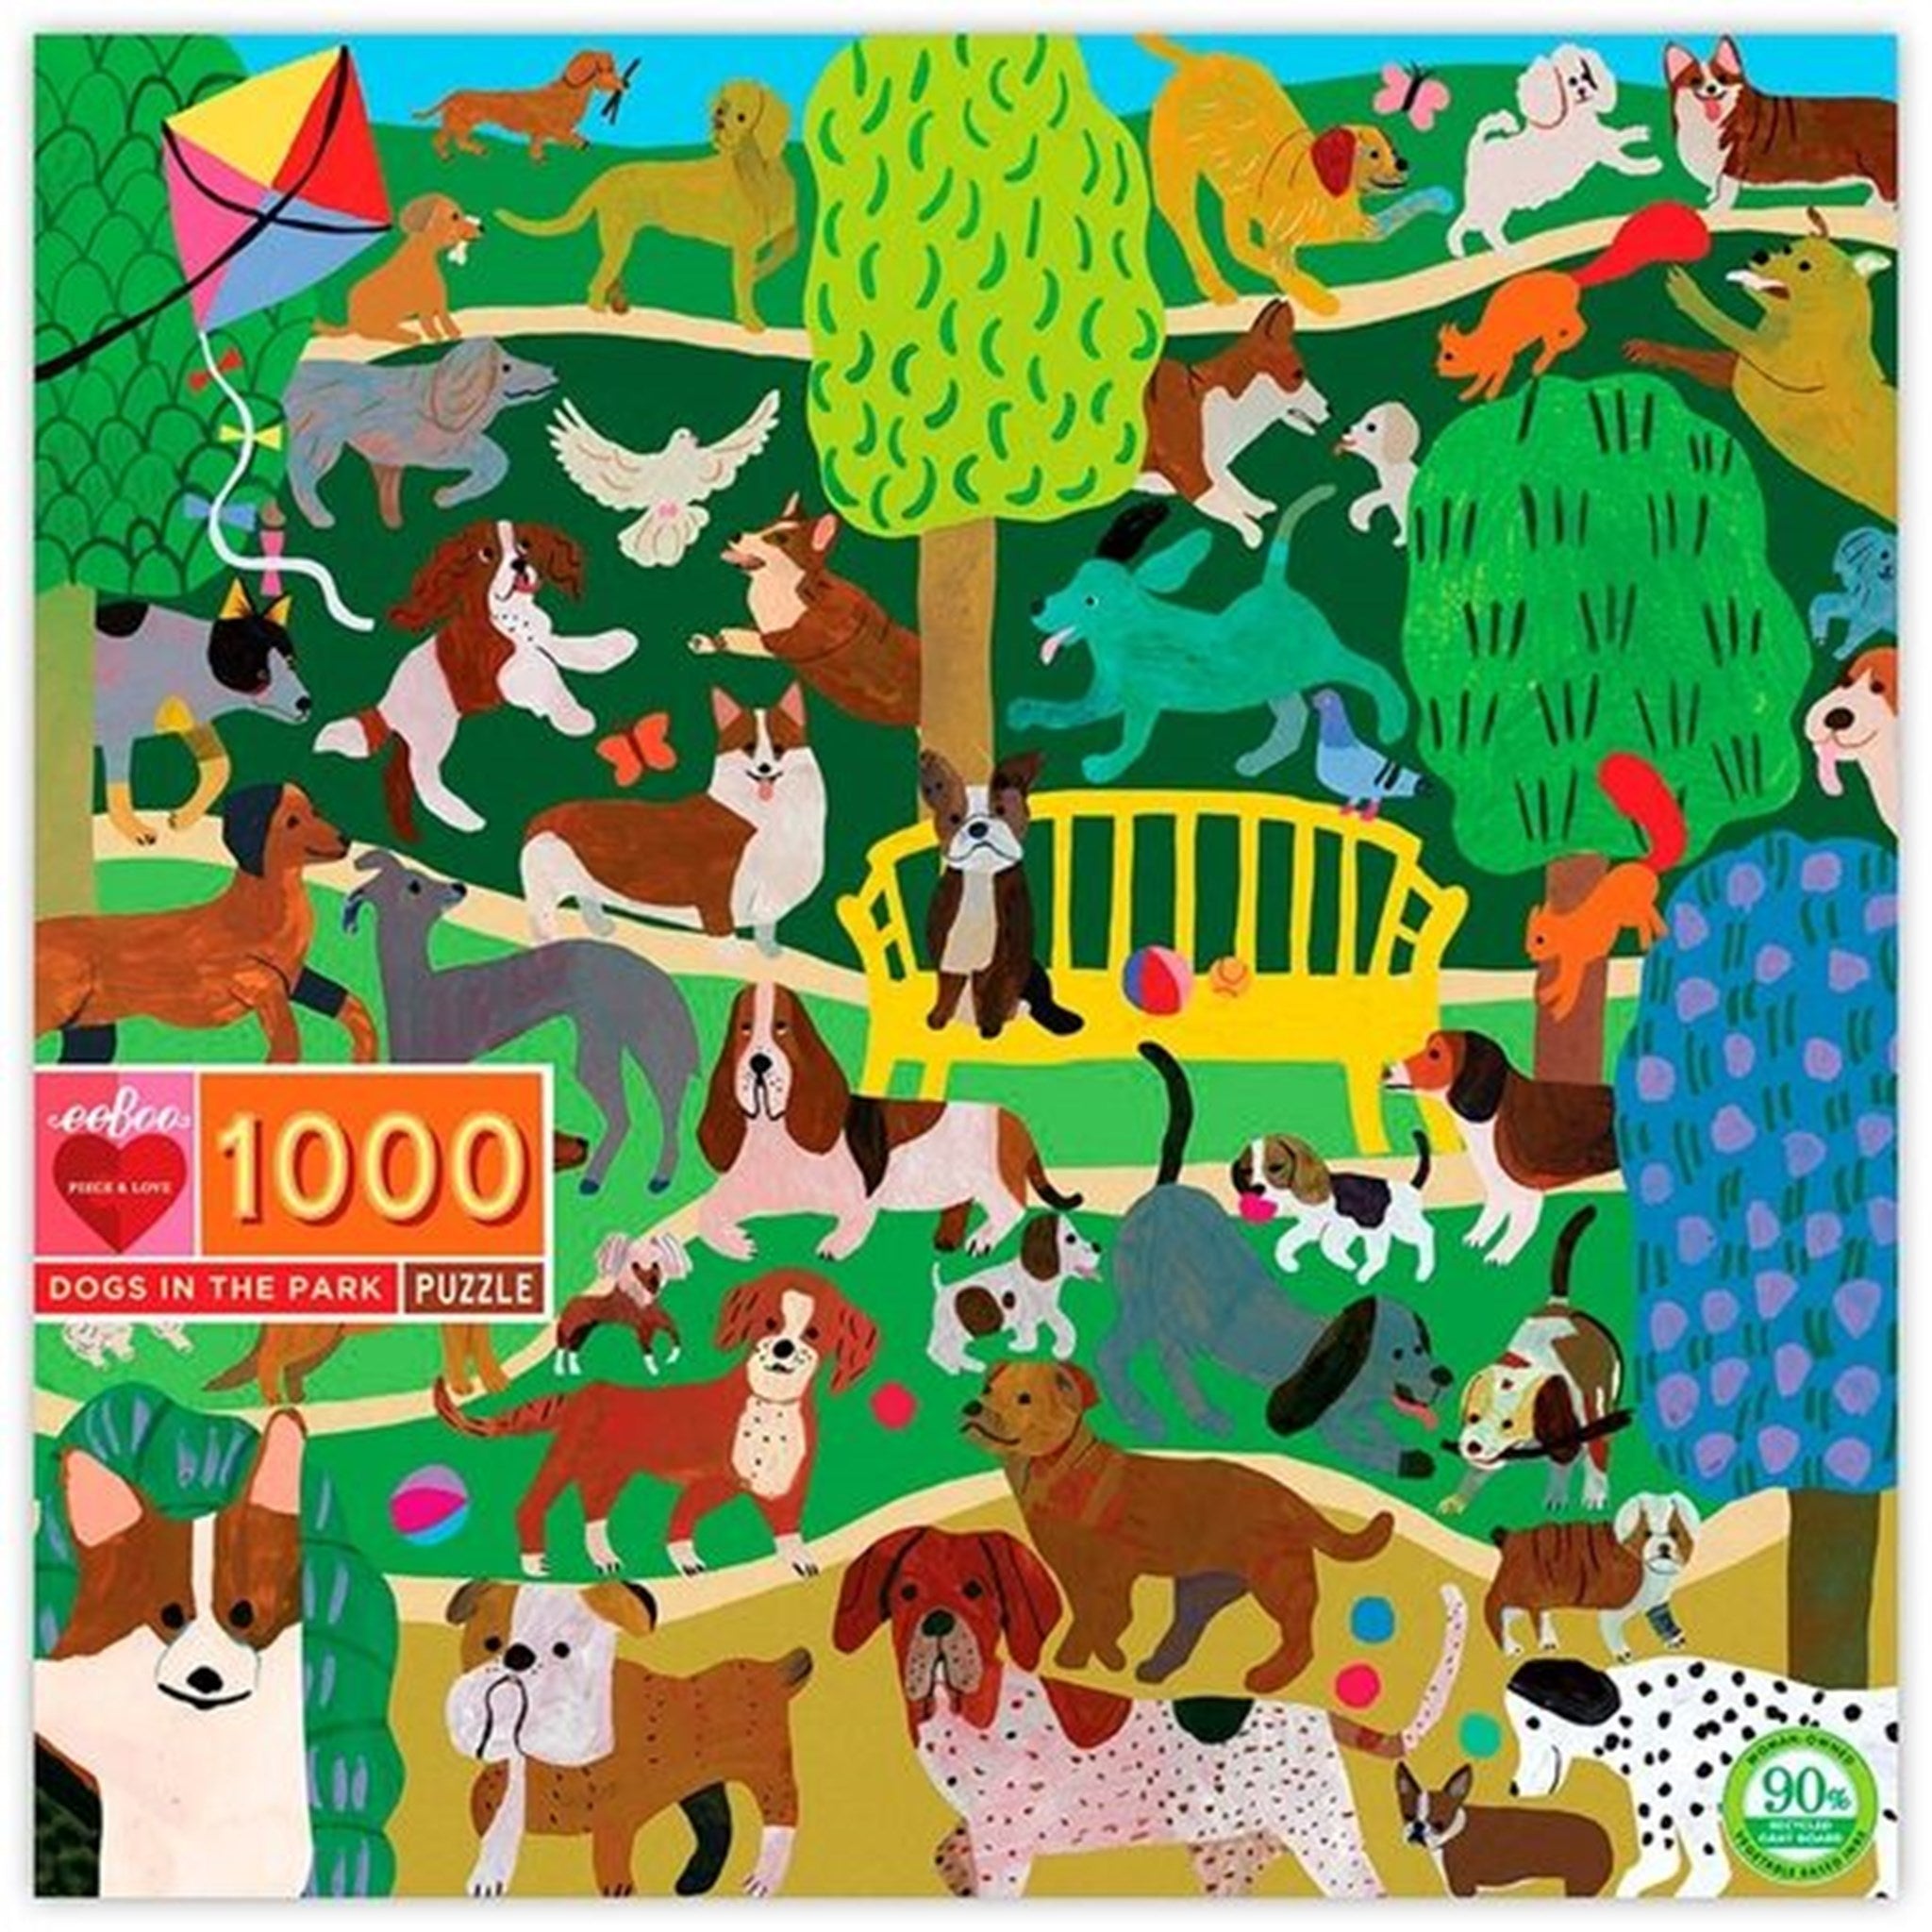 Eeboo Puzzle 1000 Pieces - Dogs in the Park